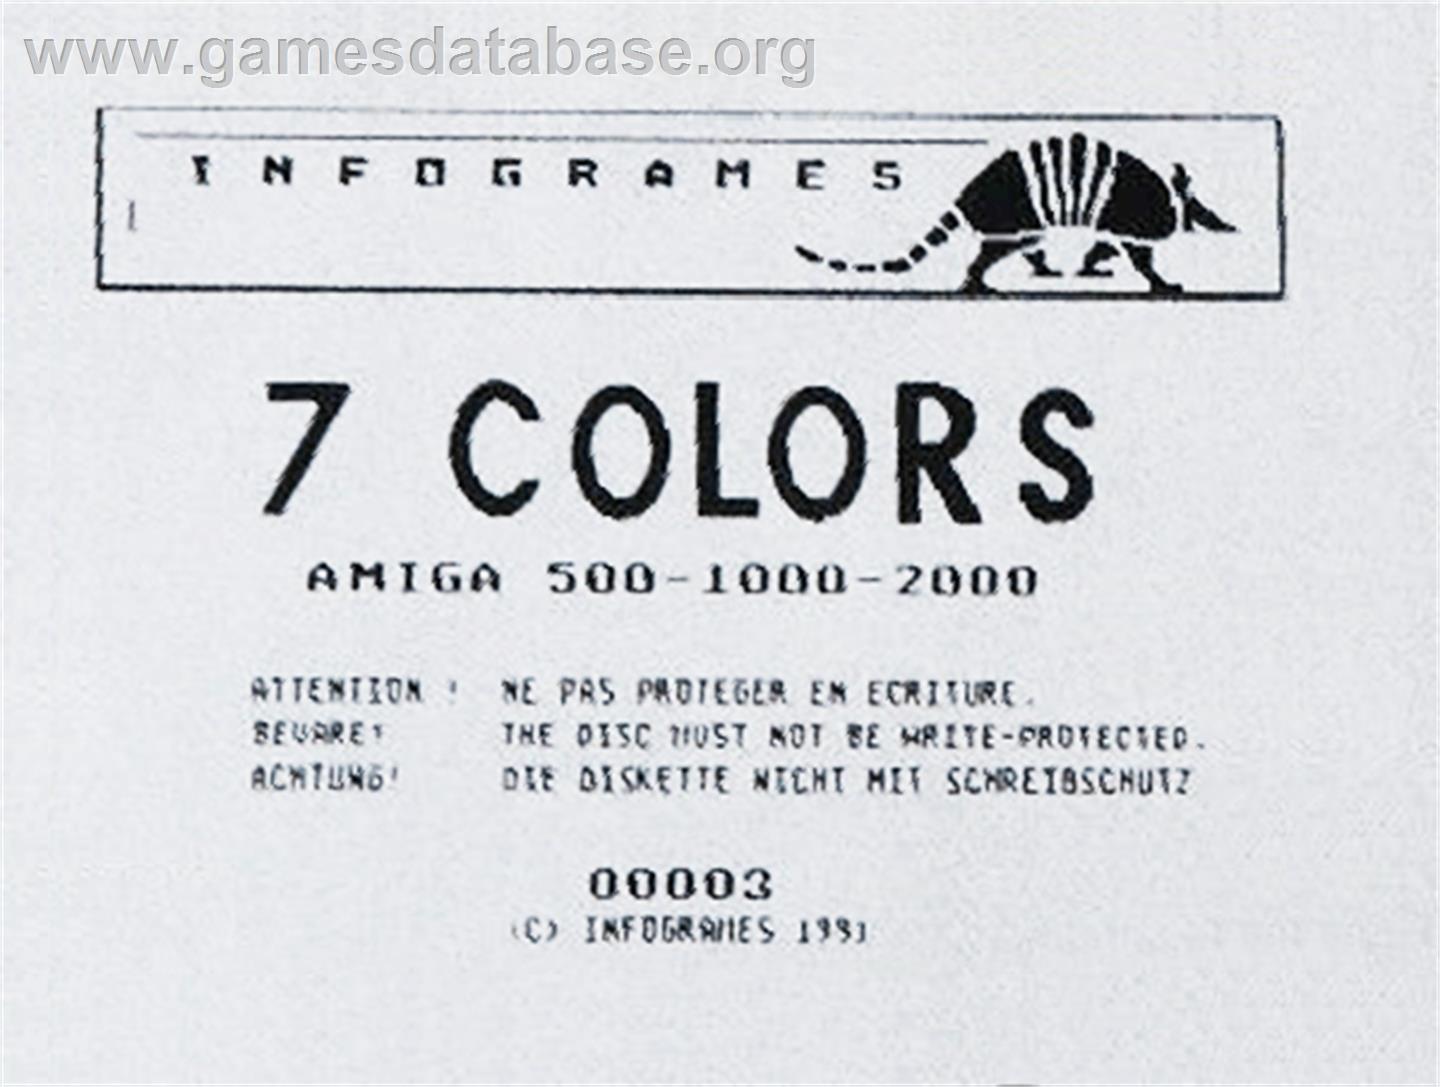 7 Colors - Commodore Amiga - Artwork - Cartridge Top